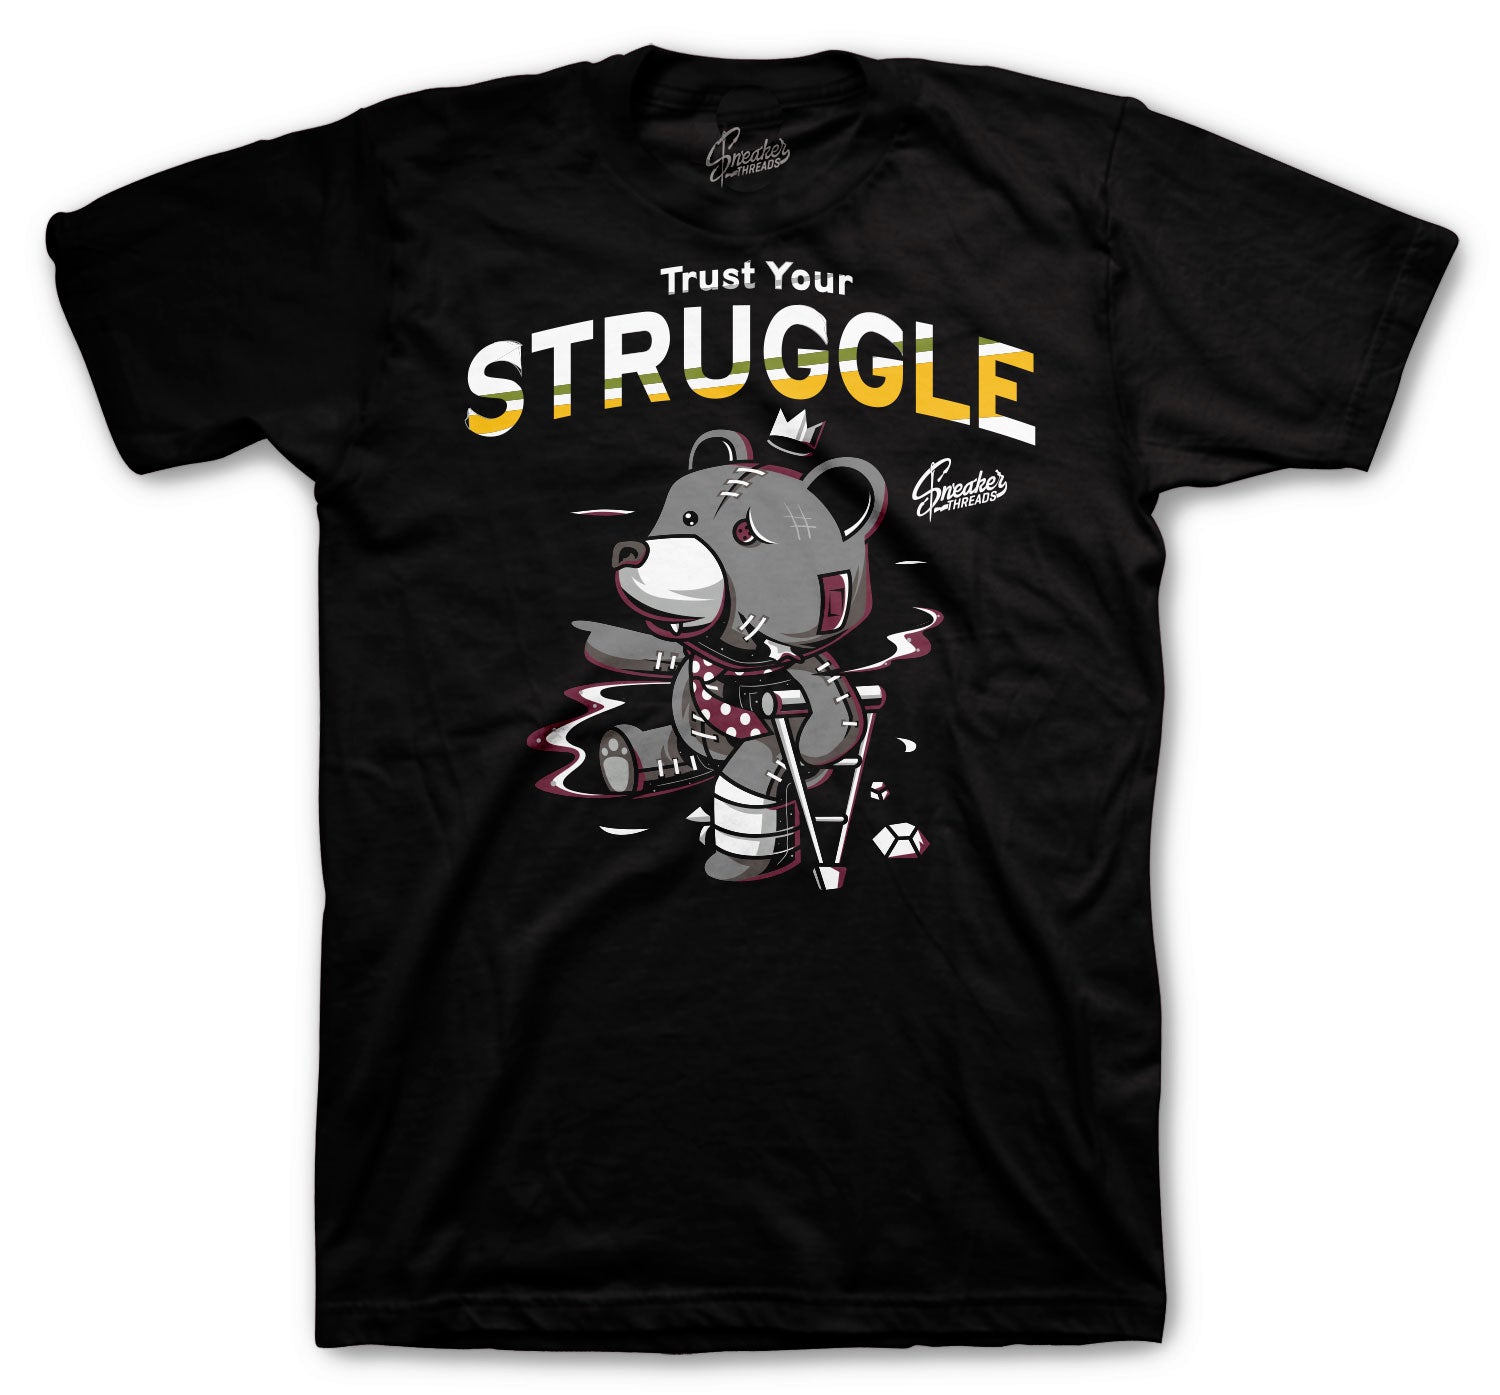 Retro 6 Bordeaux Shirt - Trust Your Struggle - Black